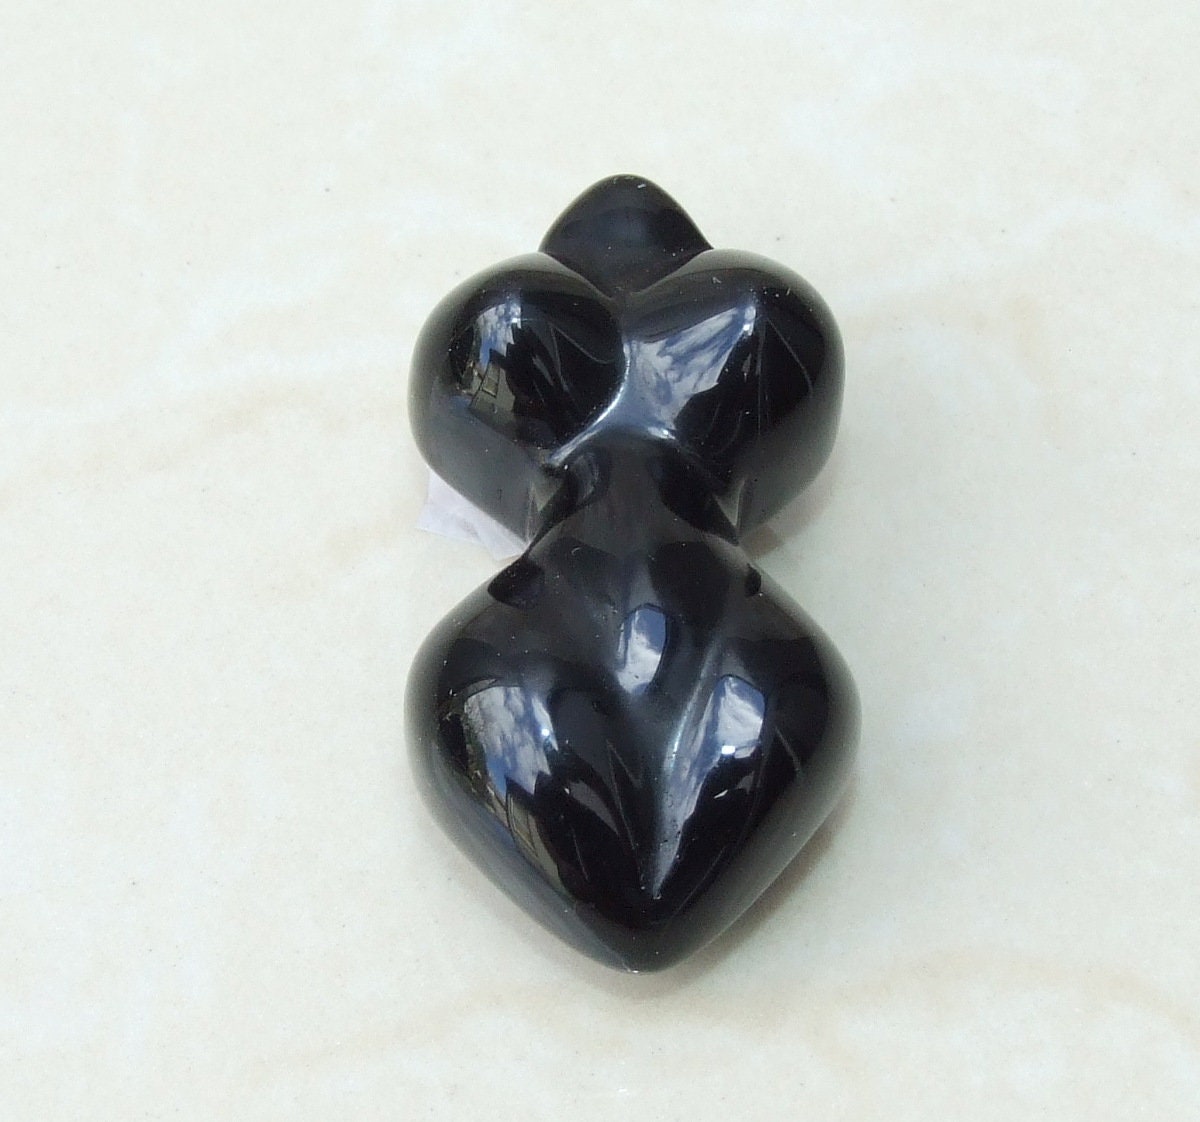 Goddess Pendant, Natural Obsidian Pendants, Carved Pendant, Gemstone Pendant, Fertility Goddess, Jewelry Pendant, 25mm x 50mm